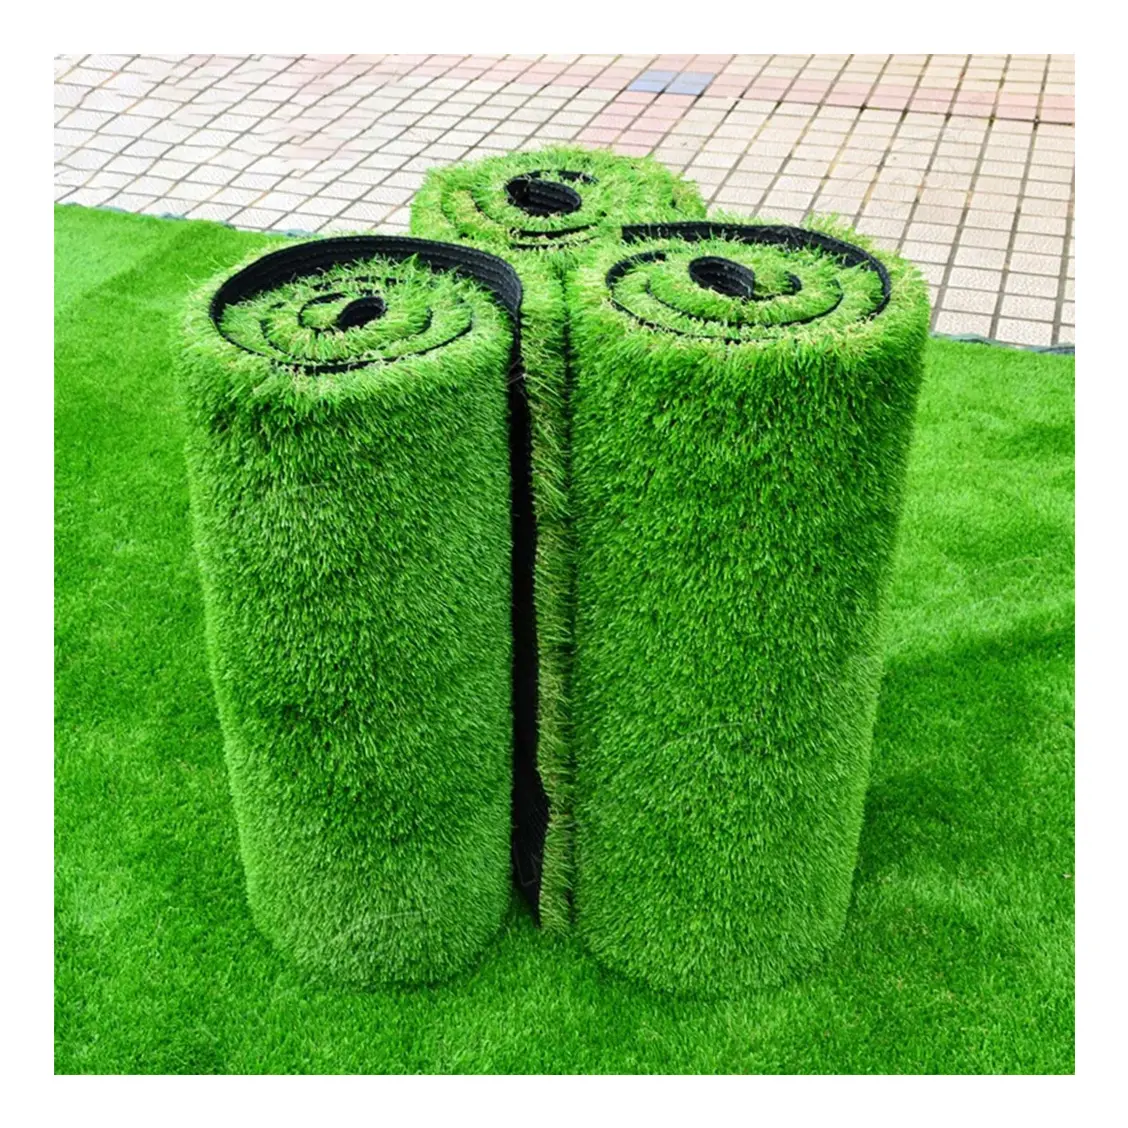 Tizen karpet rumput sintetis realistis lapangan sepak bola olahraga lantai rumput rumput buatan